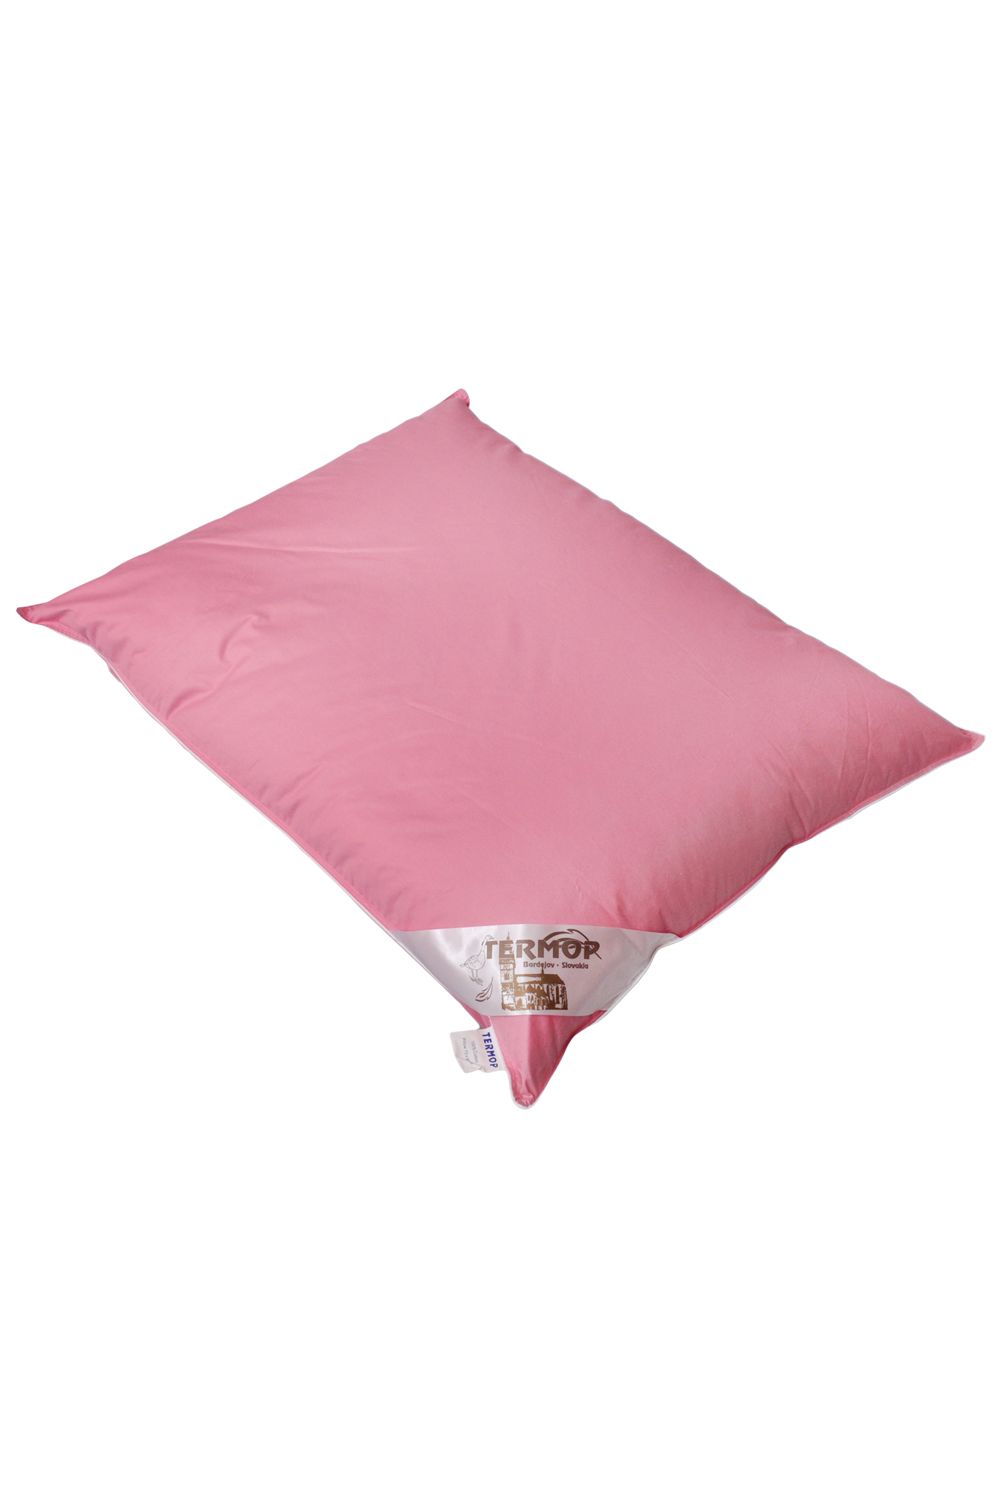 Vankúš TERMOP Luxus - ružový 50x70